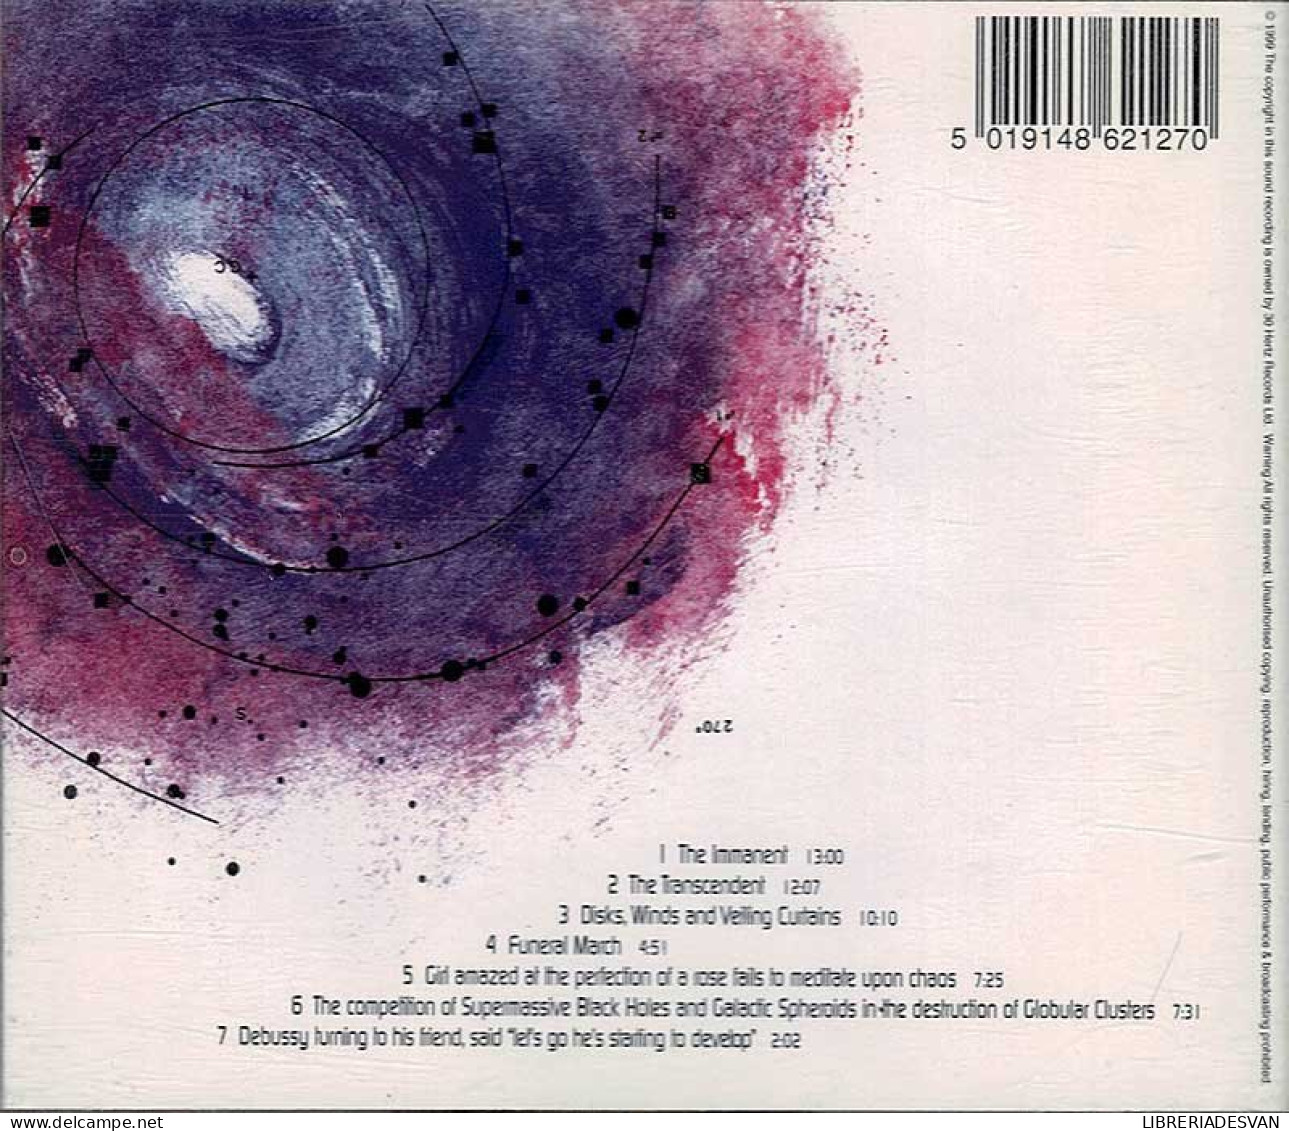 Jah Wobble - Deep Space. CD - Dance, Techno & House